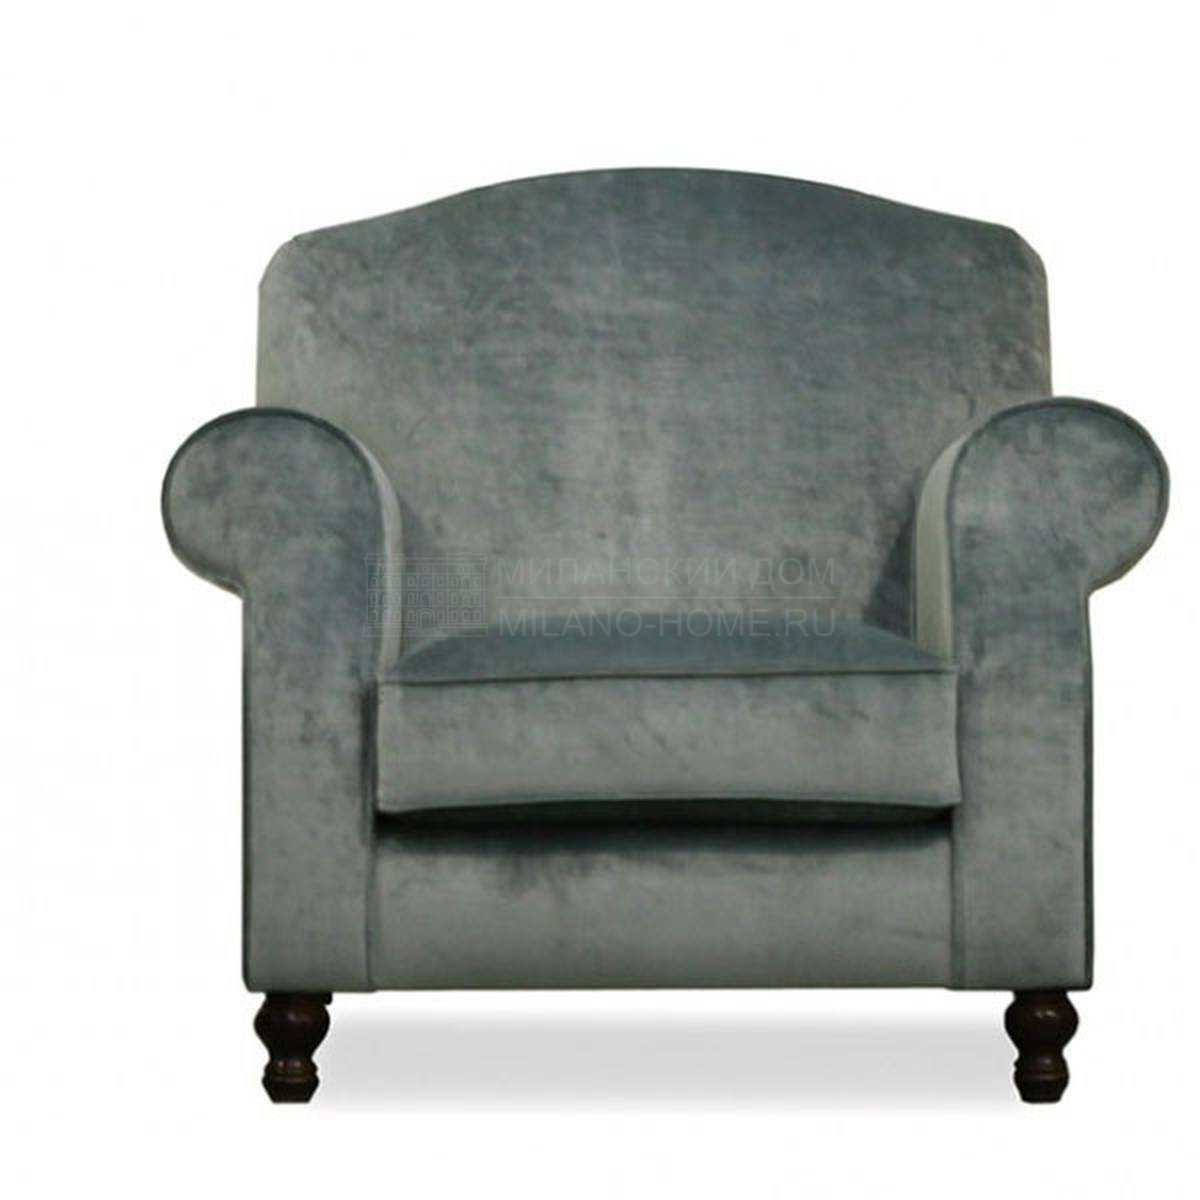 Кресло Leo/armchair из Испании фабрики MANUEL LARRAGA